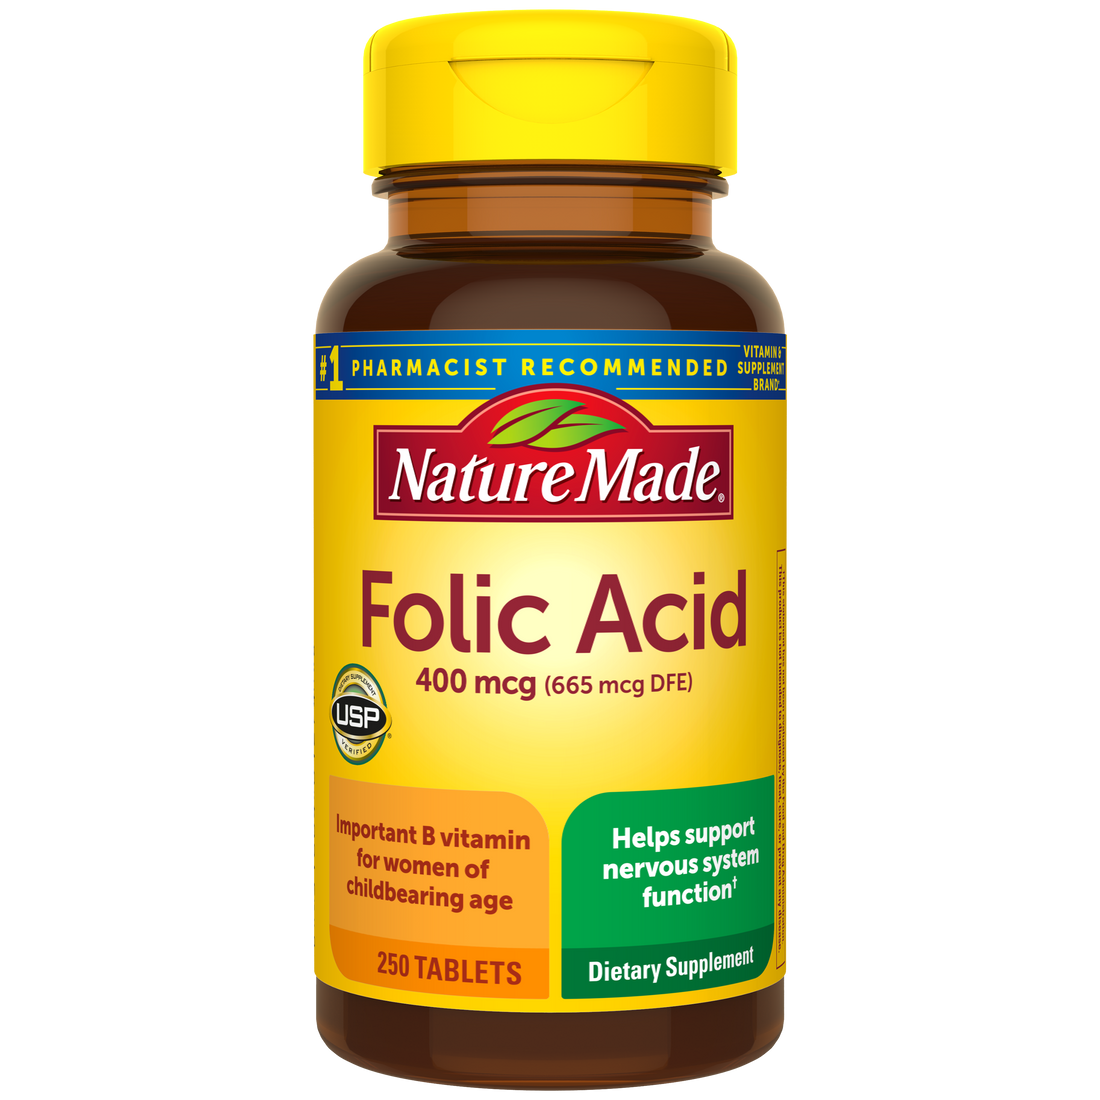 Photos - Vitamins & Minerals Nature Made Nature Made Folic Acid 400 mcg Tablets